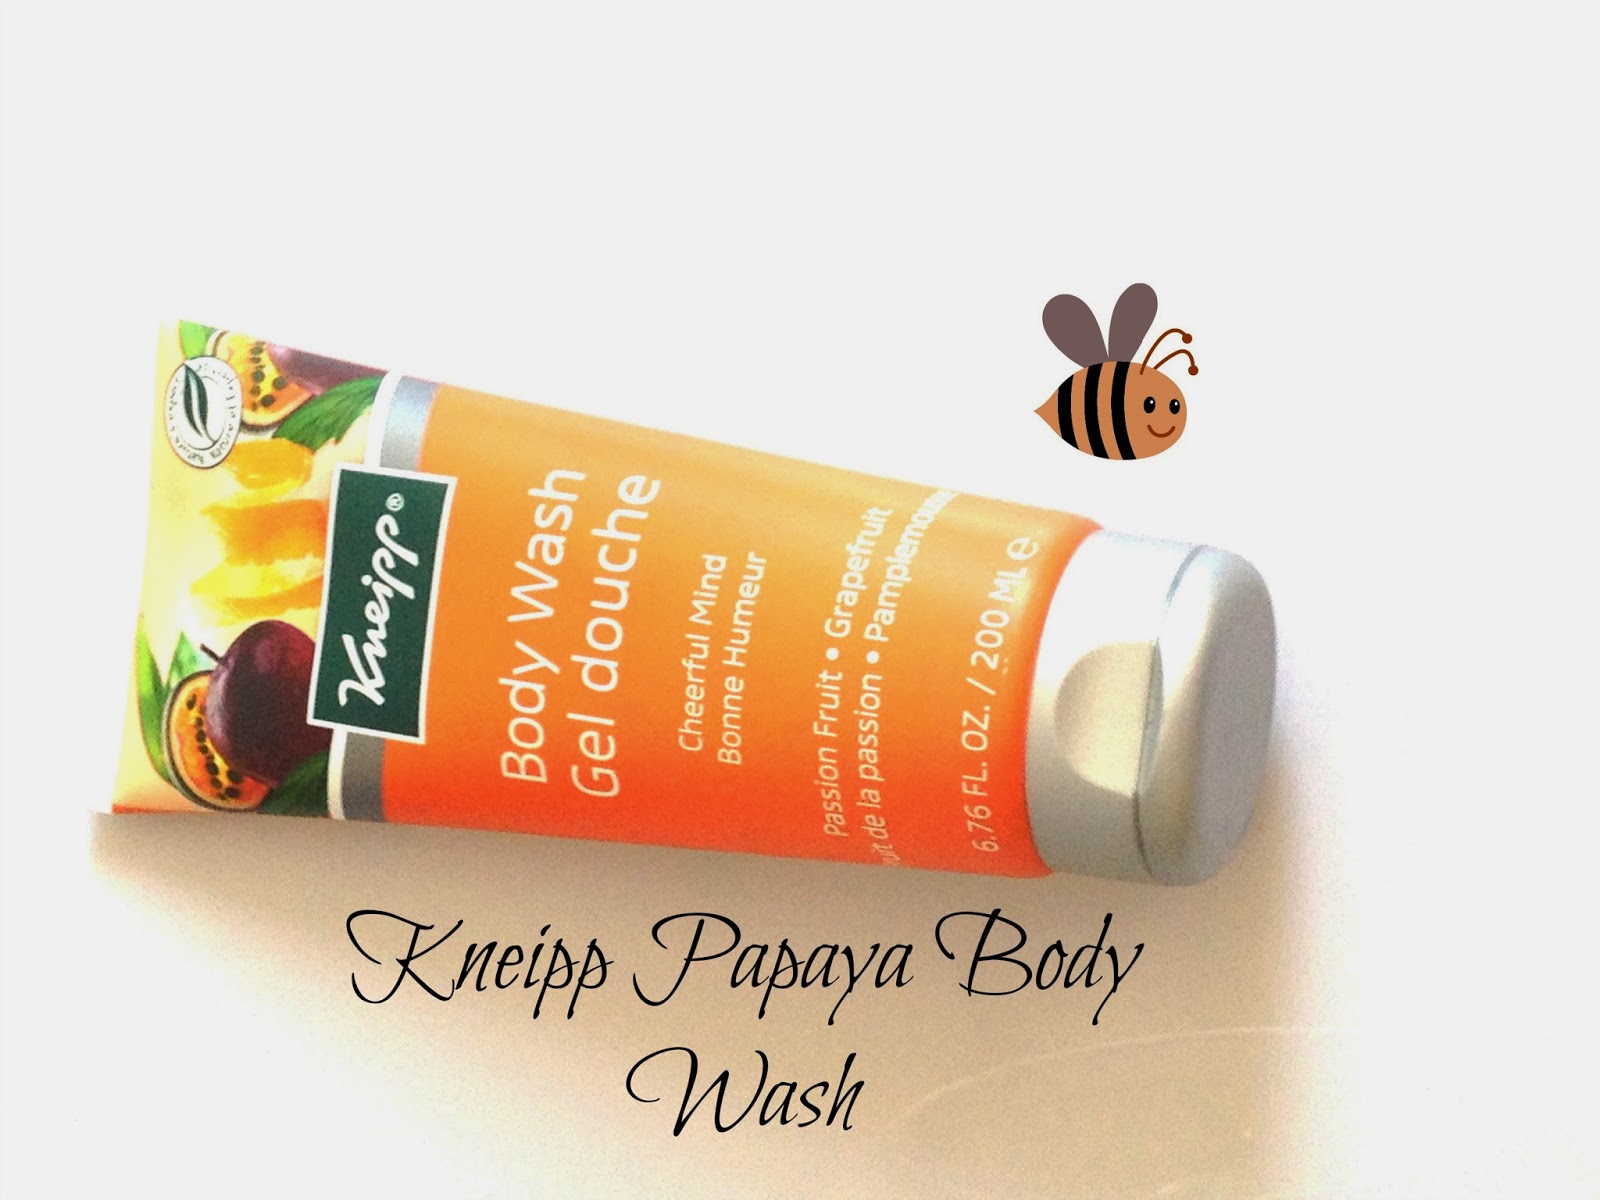 Kneipp Papaya Body Wash Reviews 